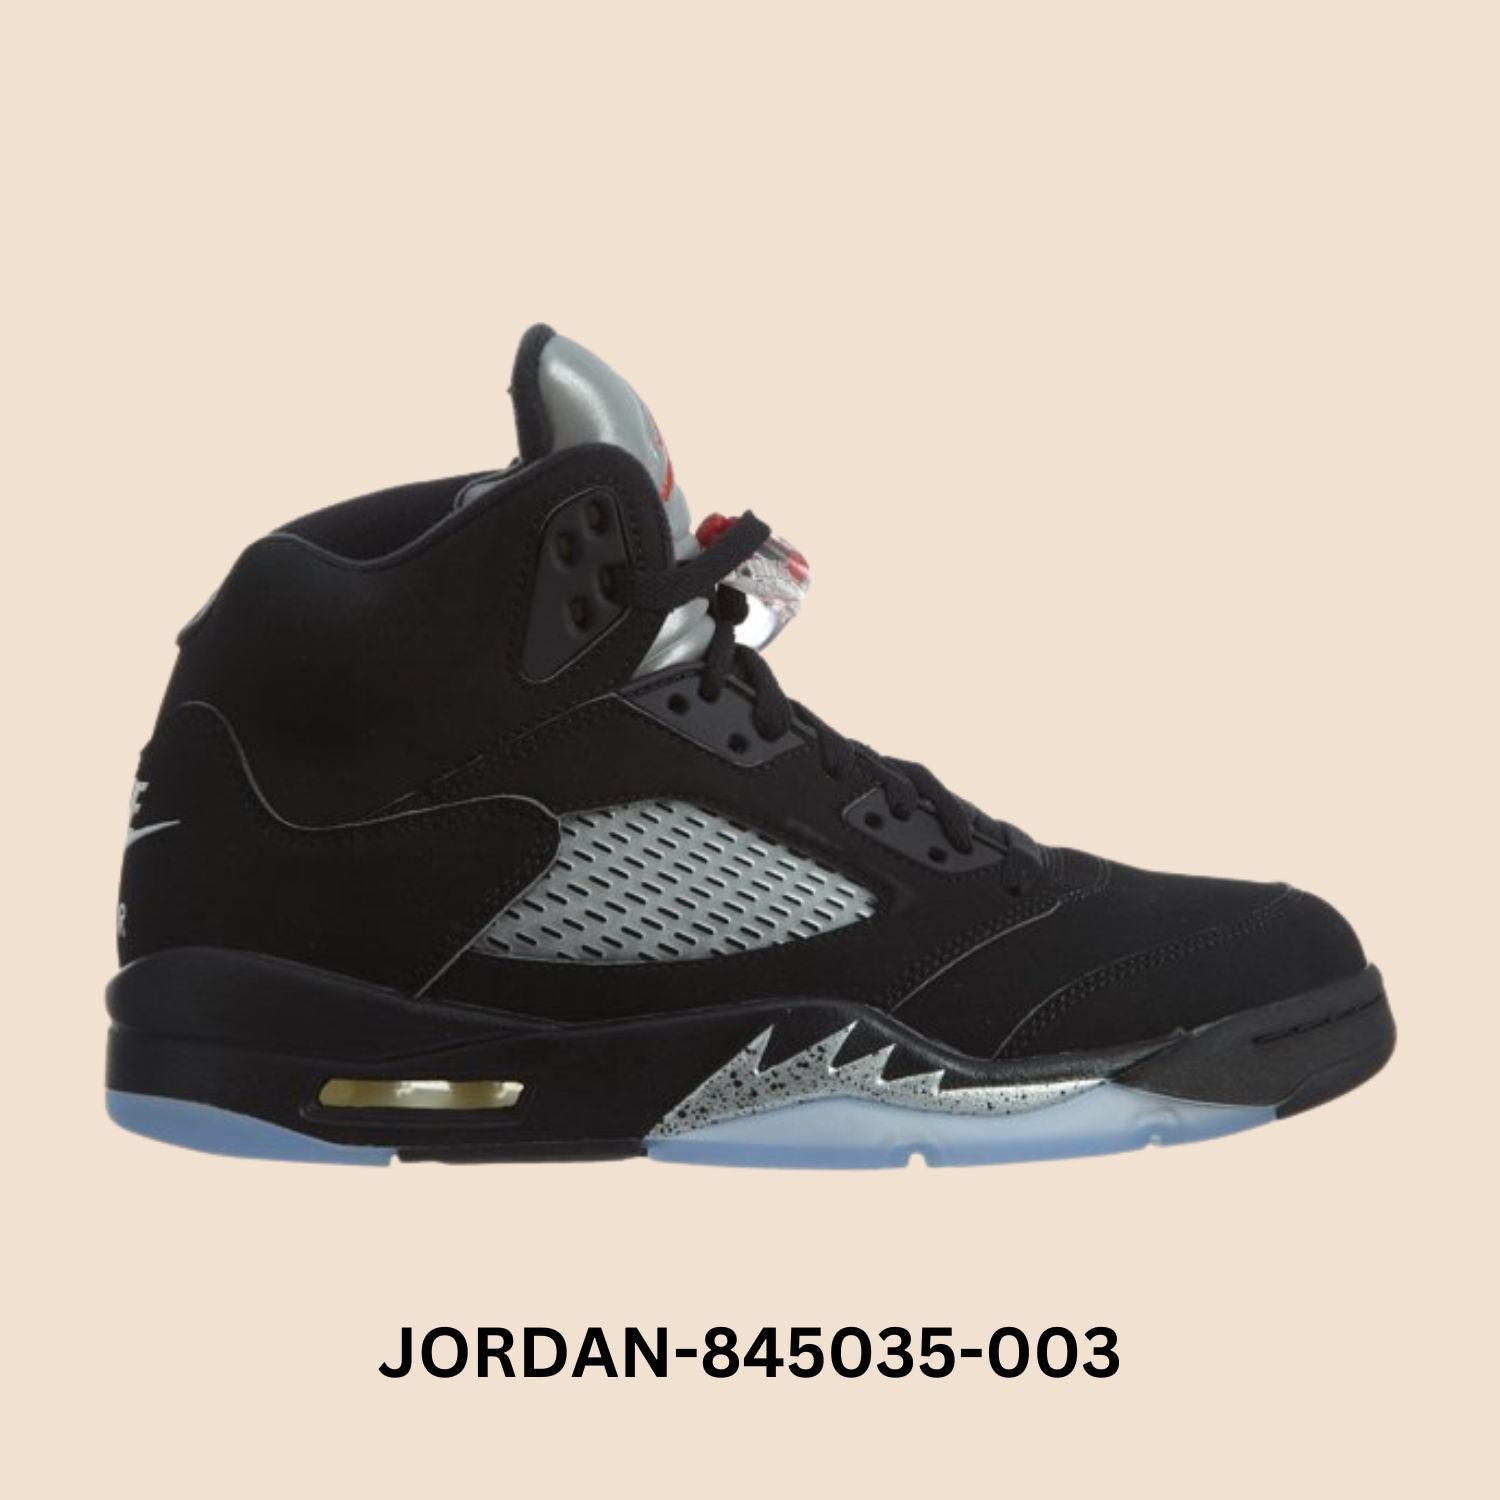 Air Jordan 5 Retro OG "Metallic" Men's Style# 845035-003